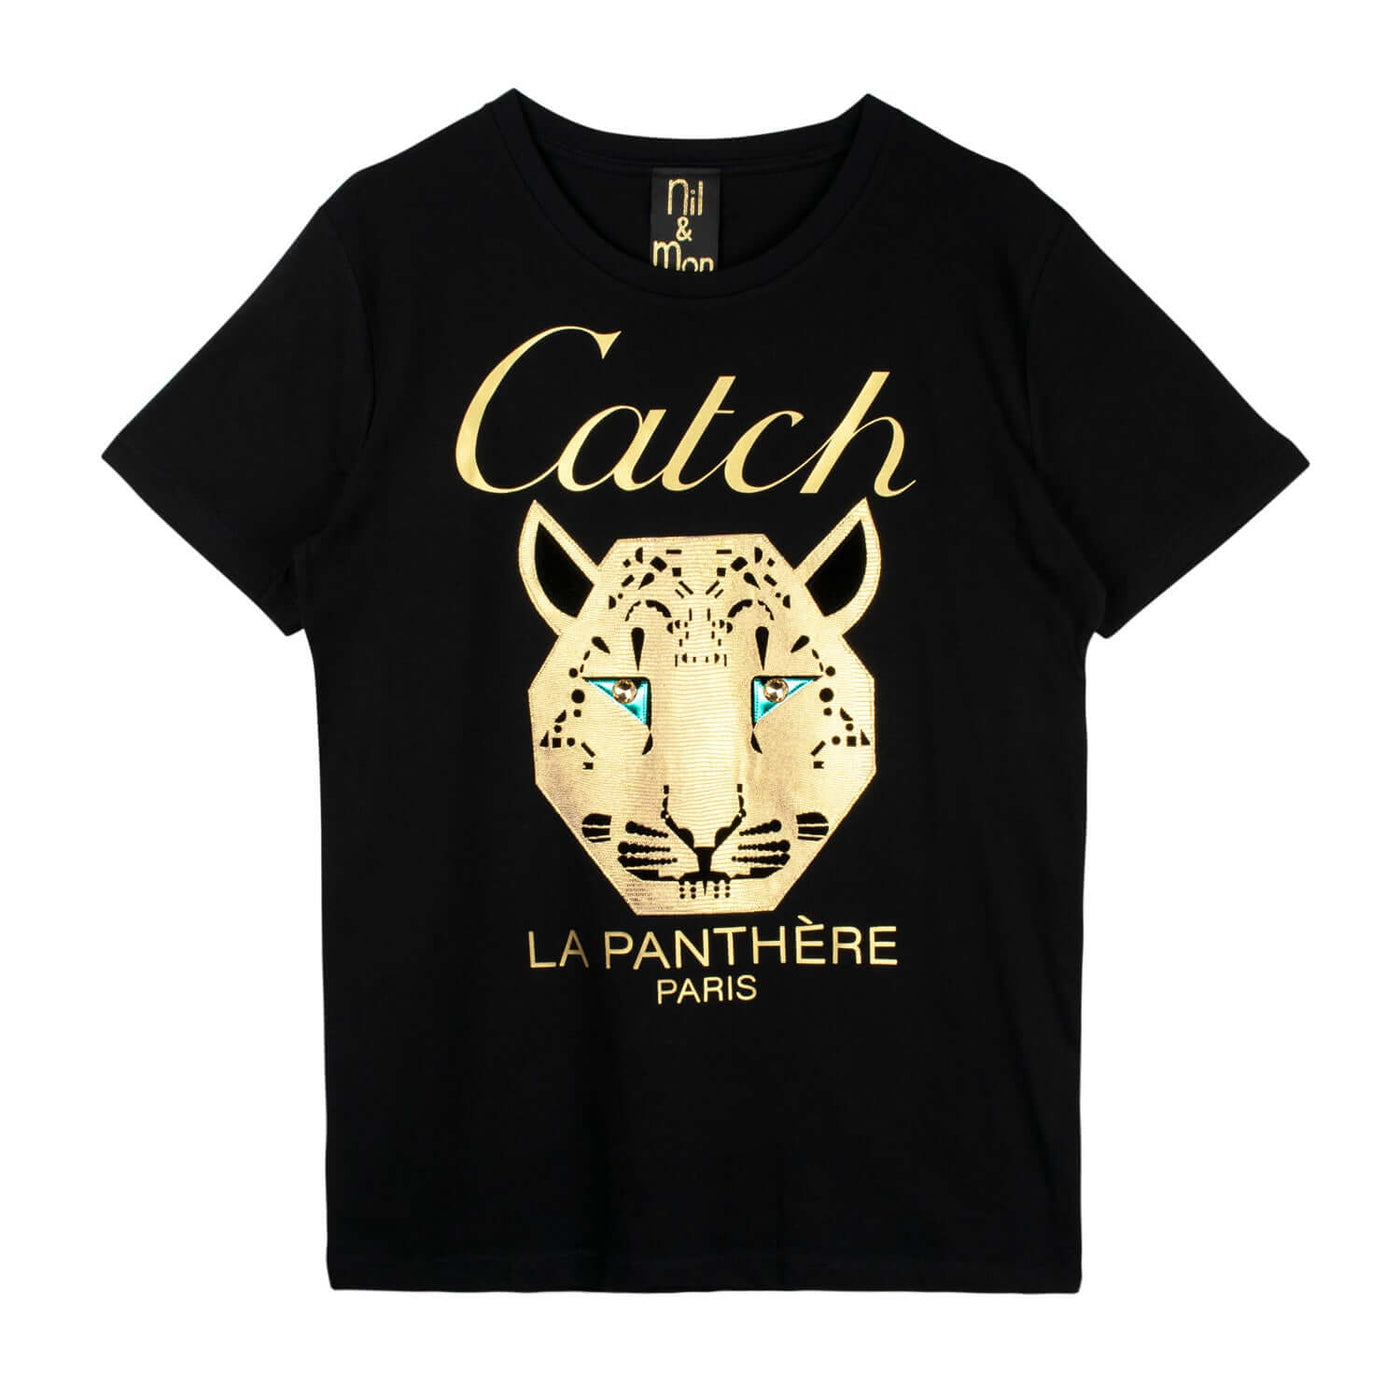 T-Shirt "Catch" - black